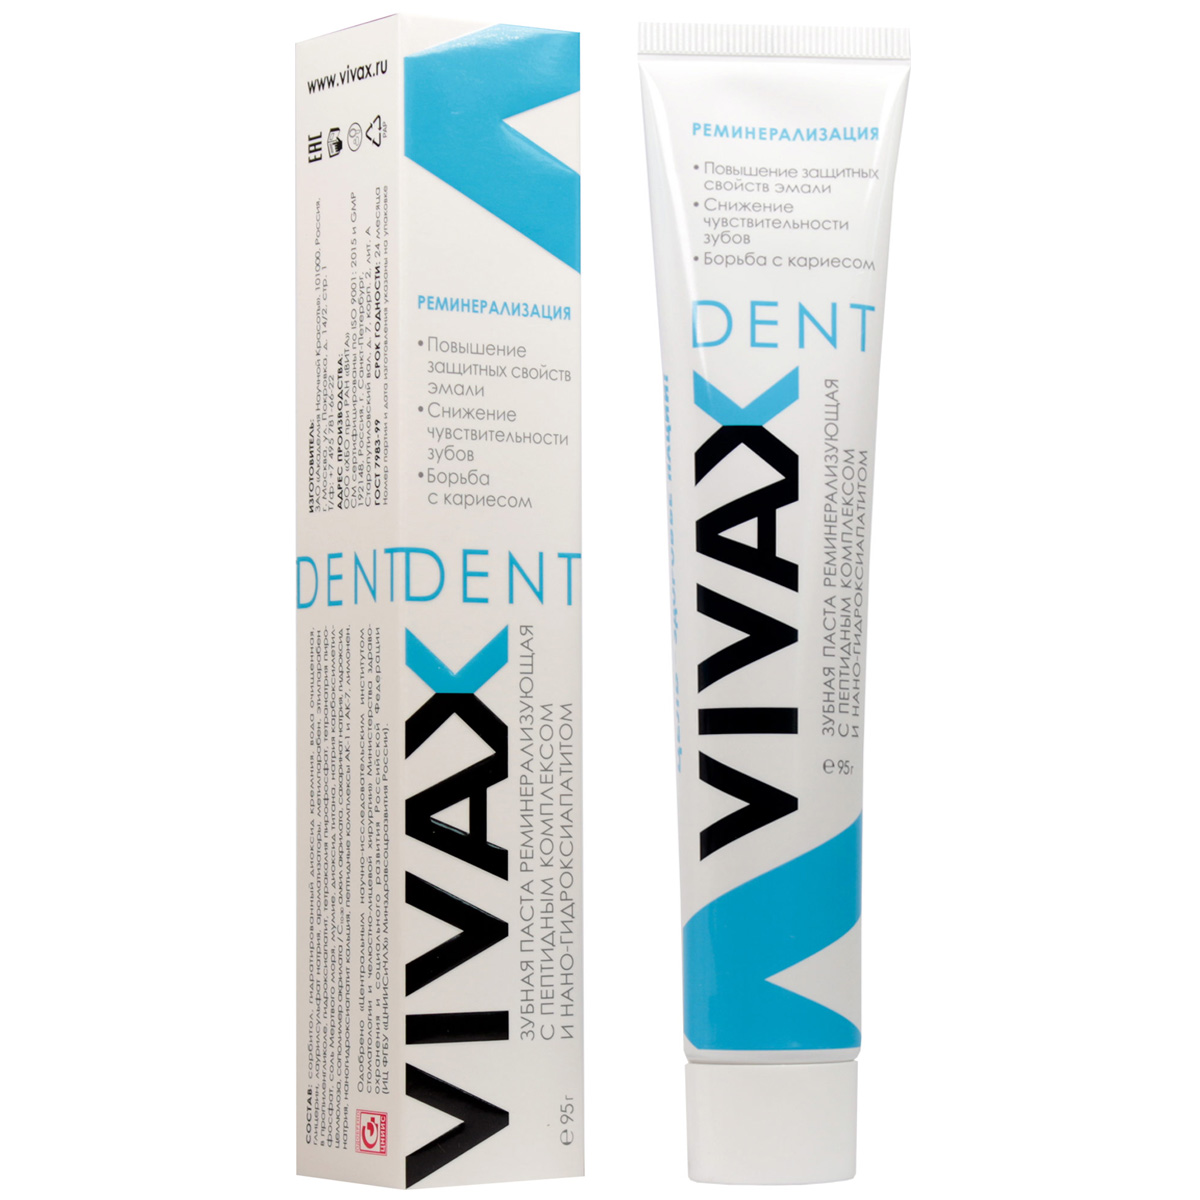 Зубная паста Vivax vivax паста зубная с бетулавитом vivax dent 95 мл